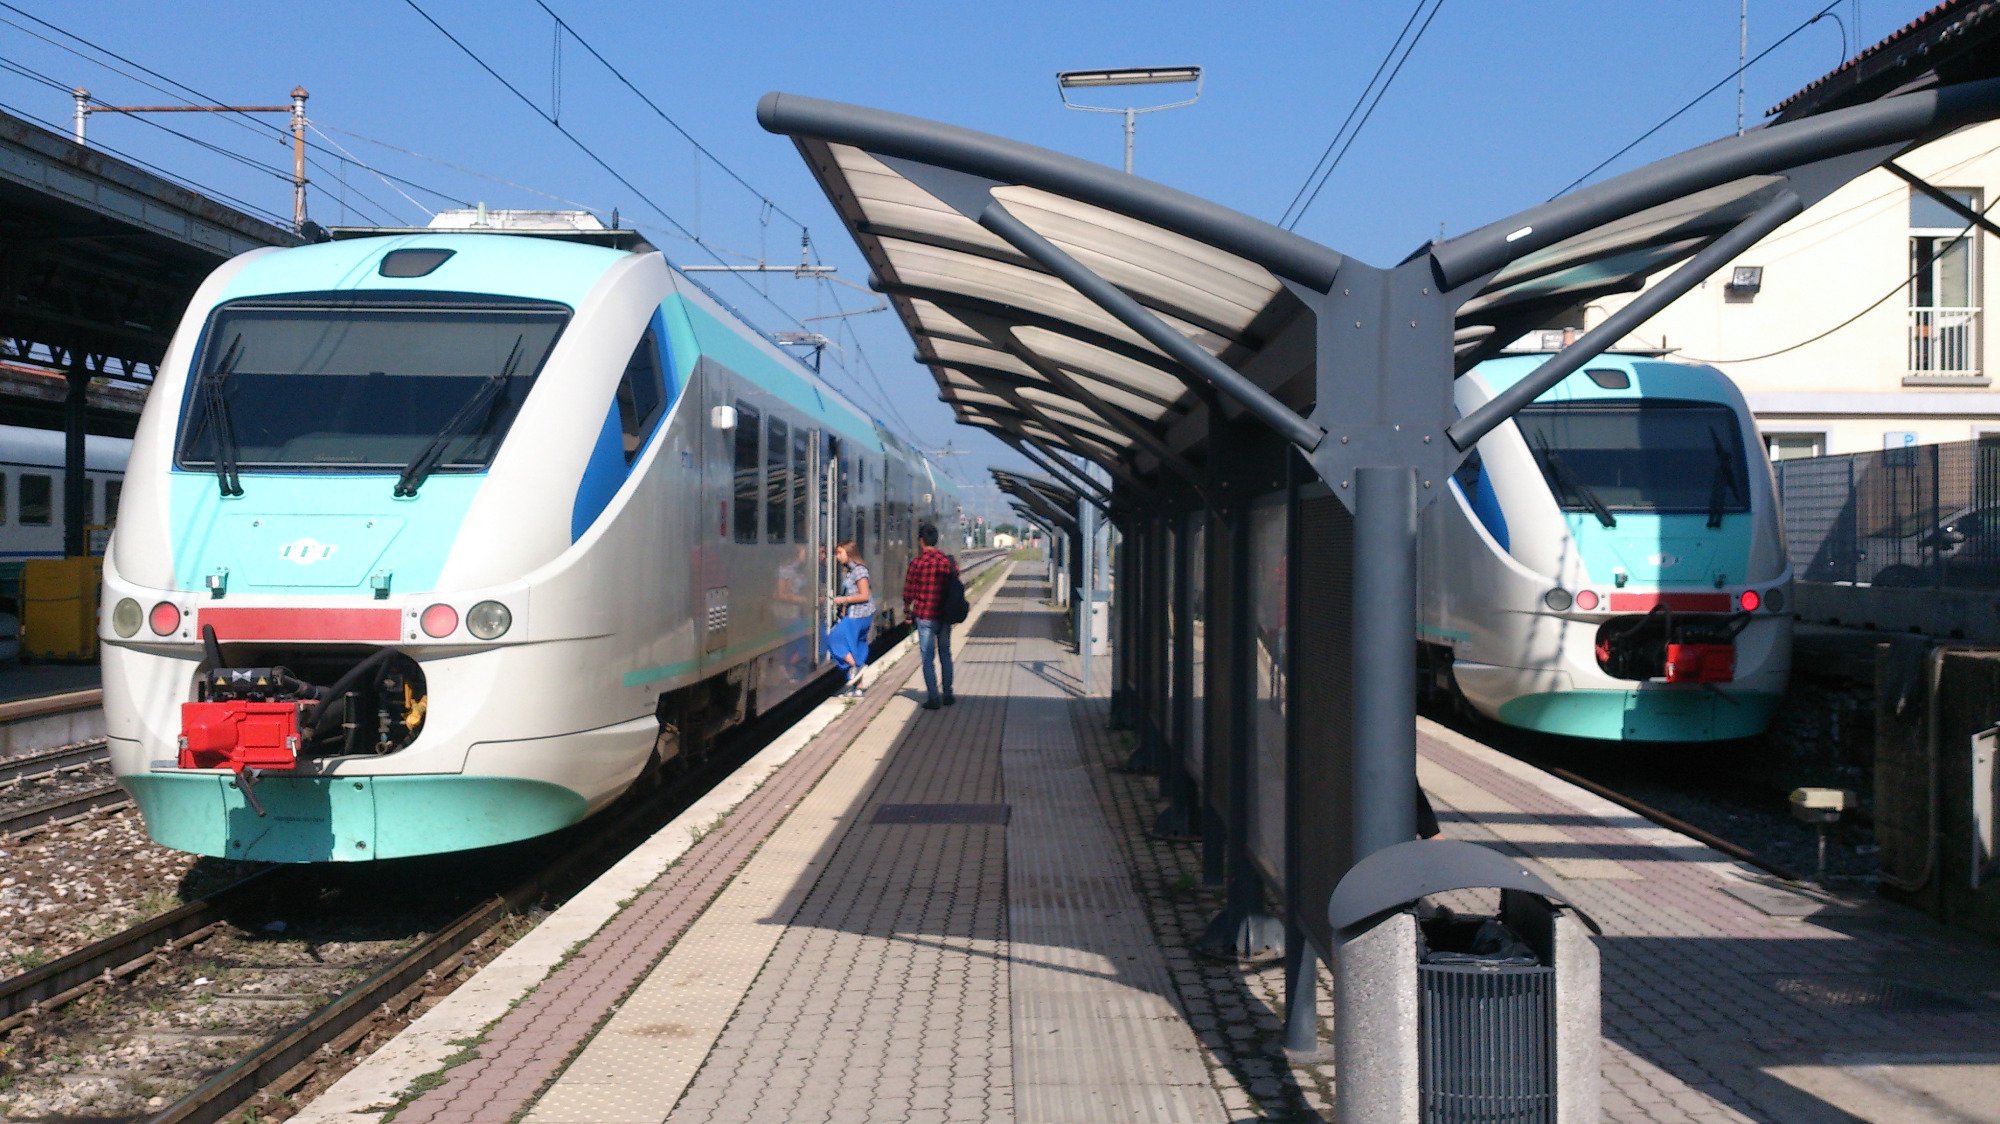 TFT - Trasporto Ferroviario Toscano